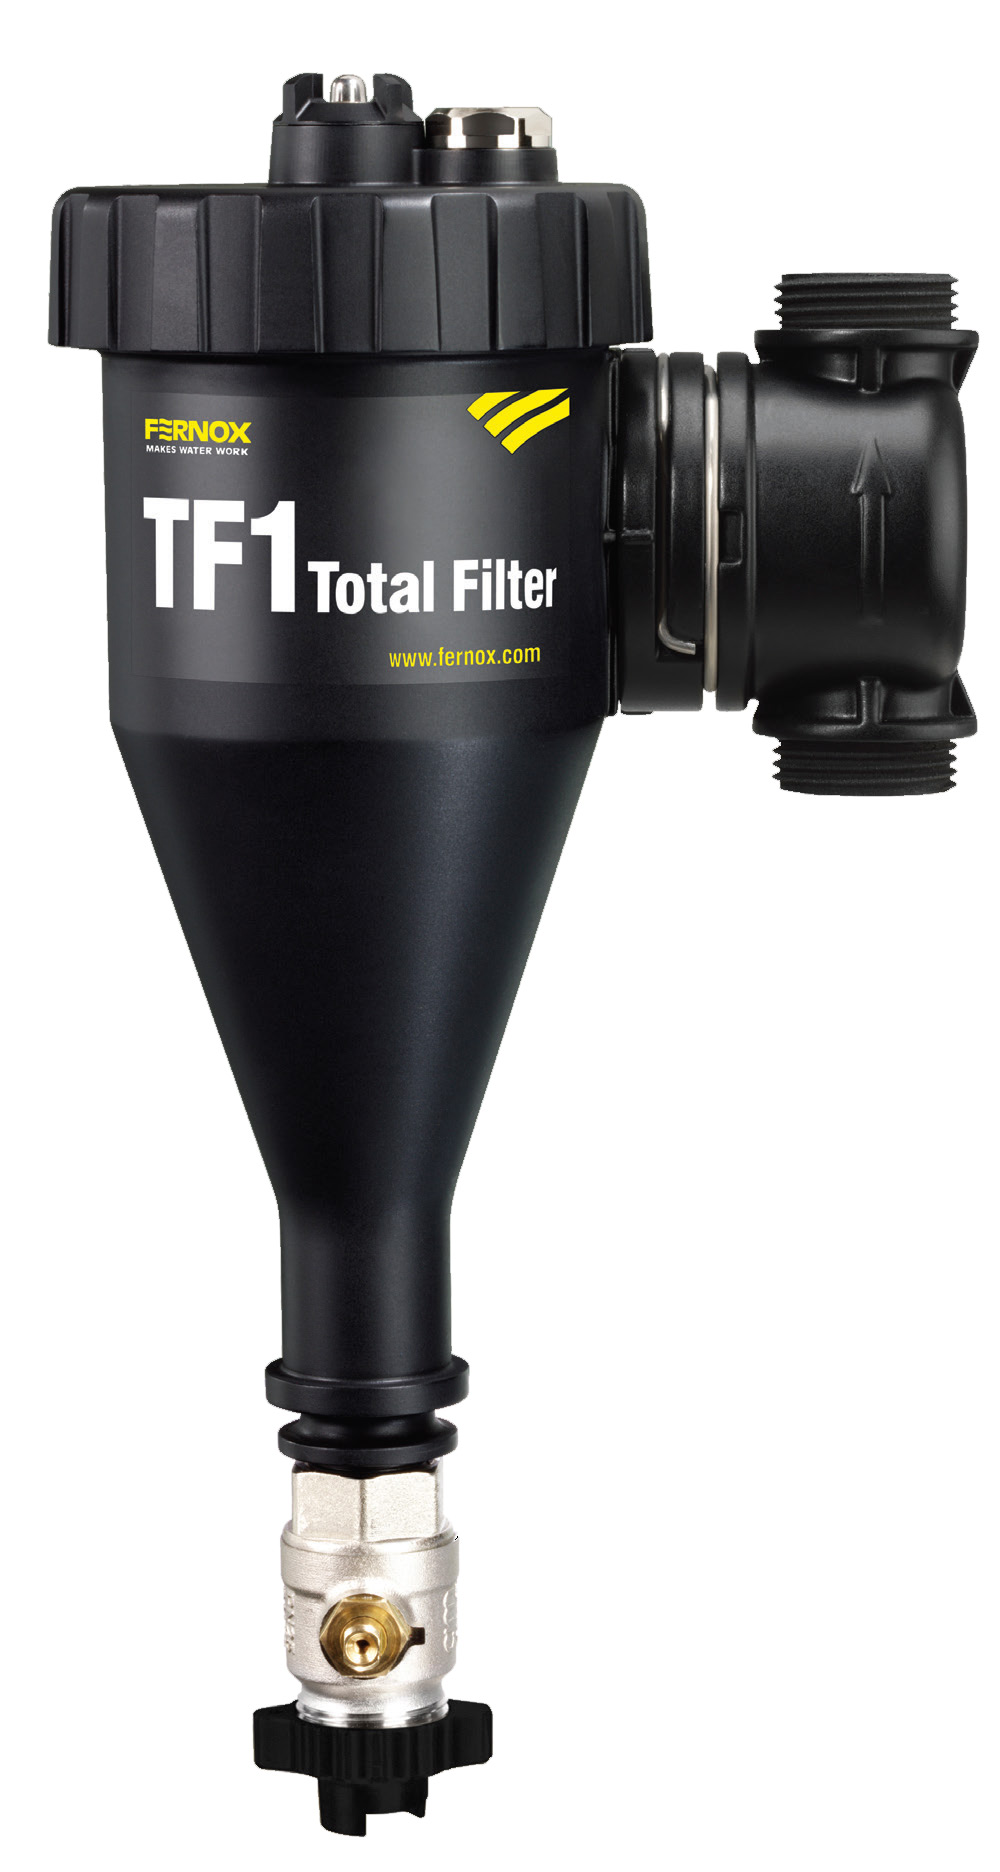 TF1 Total Filter